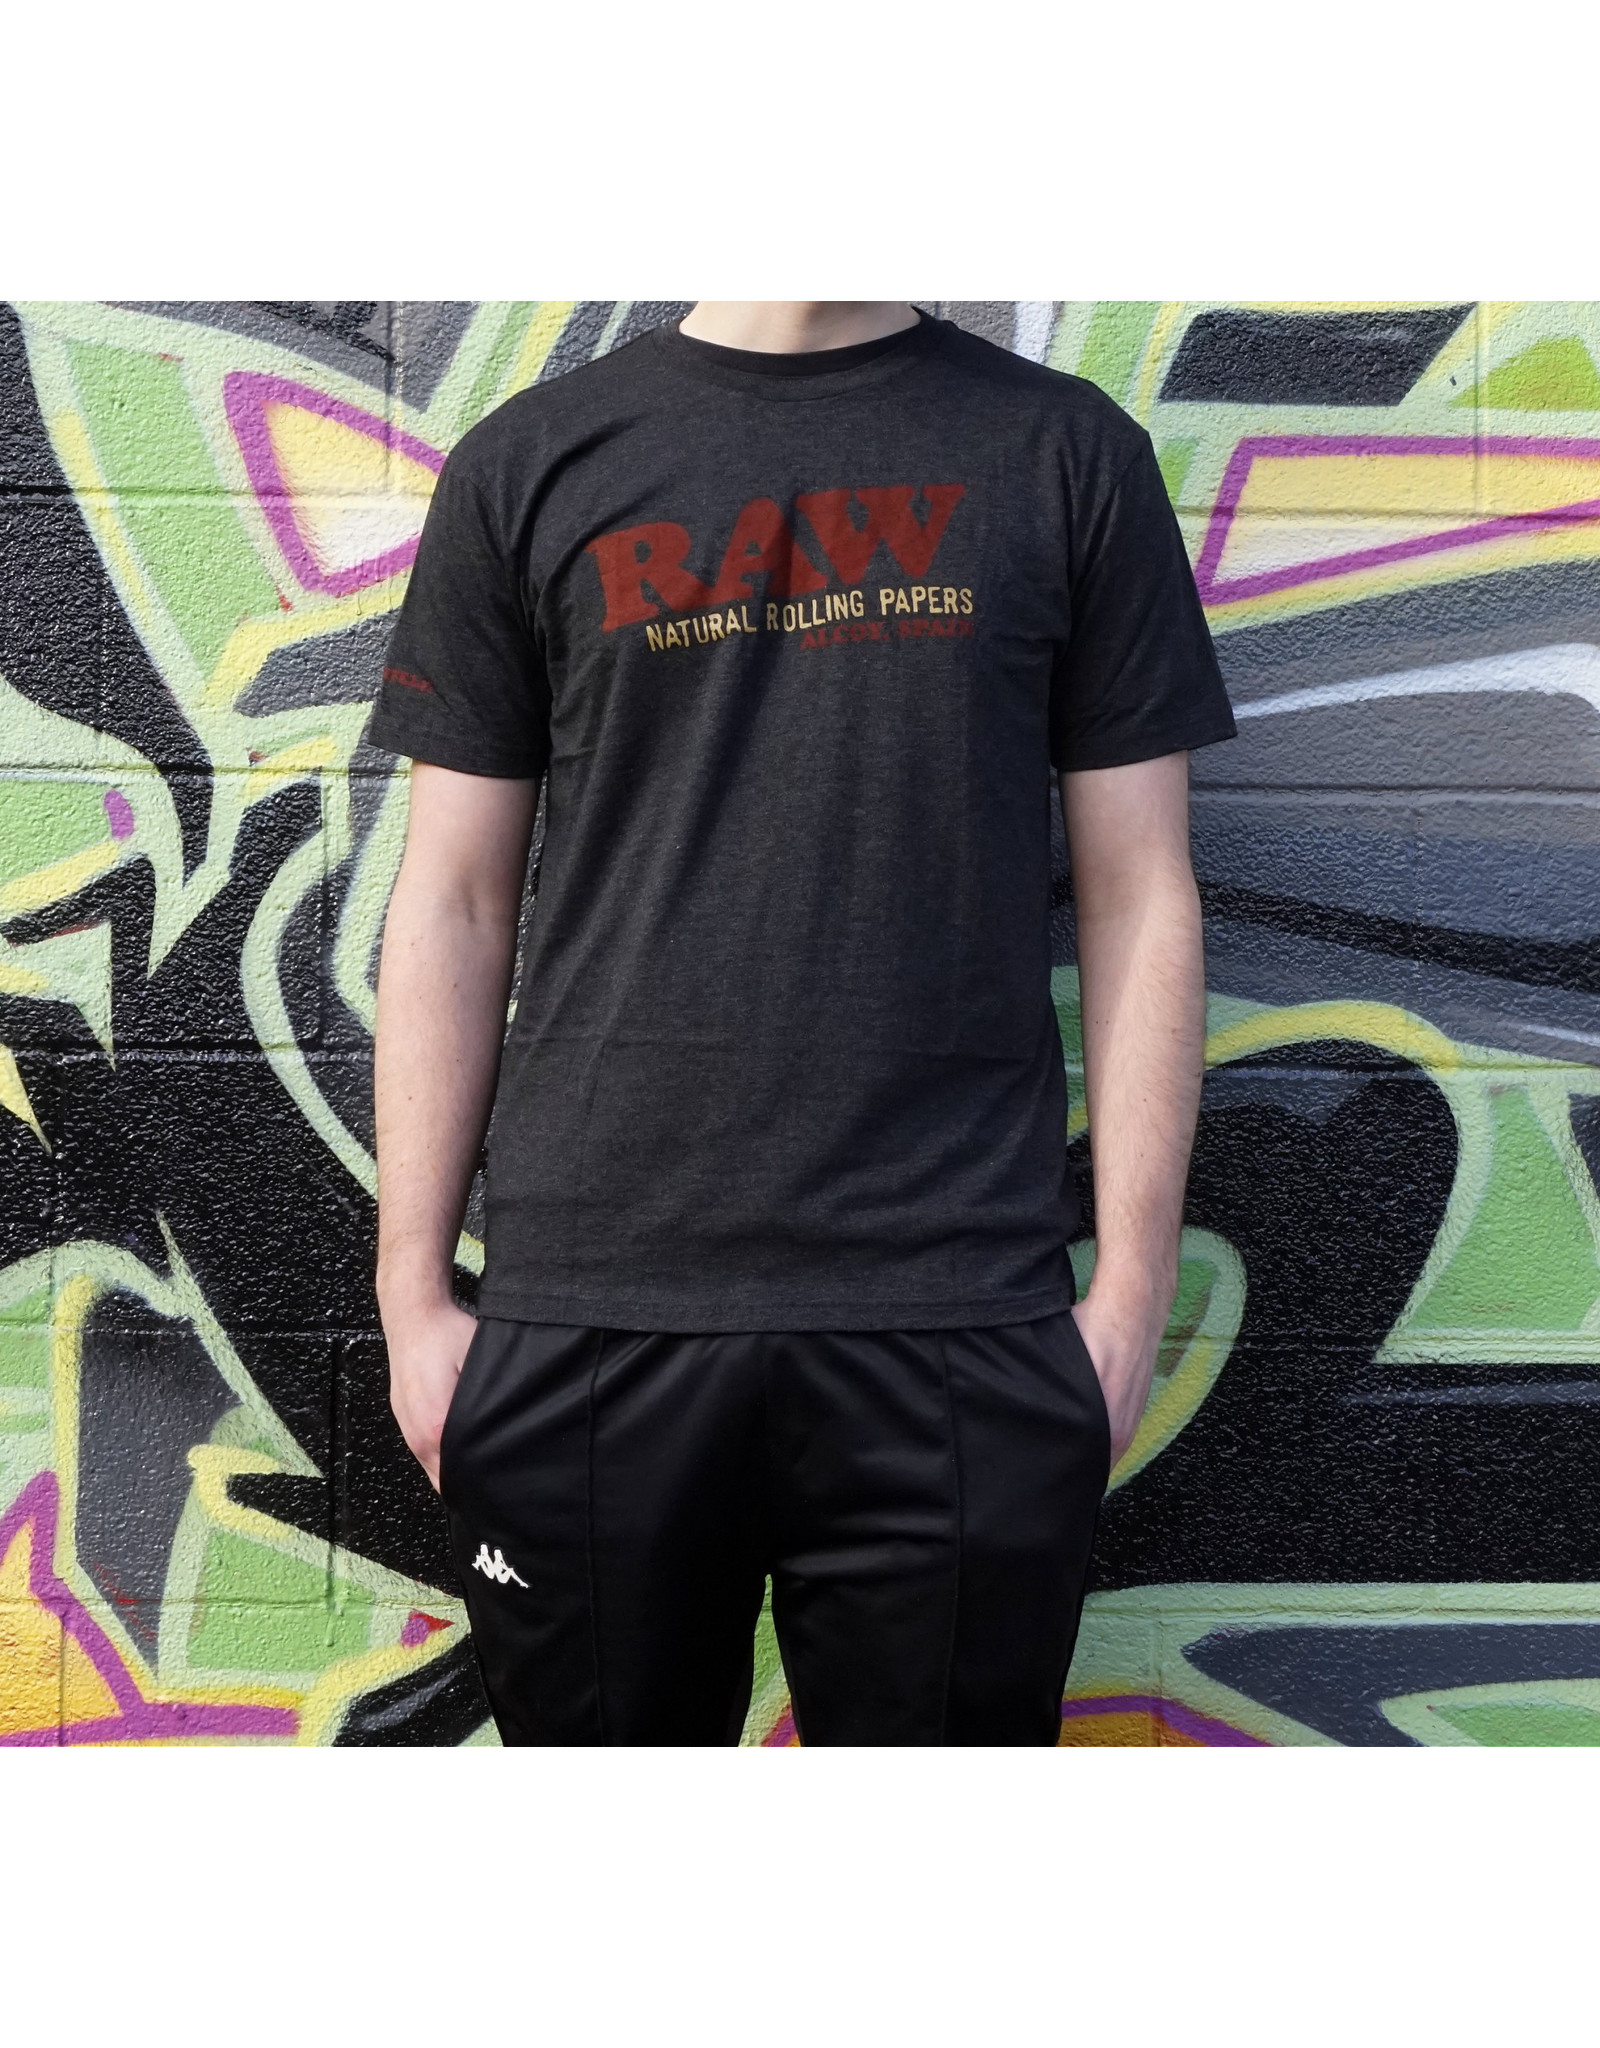 Raw Raw Unisex Black Tri-BlendDistressed Logo Shirt - Medium